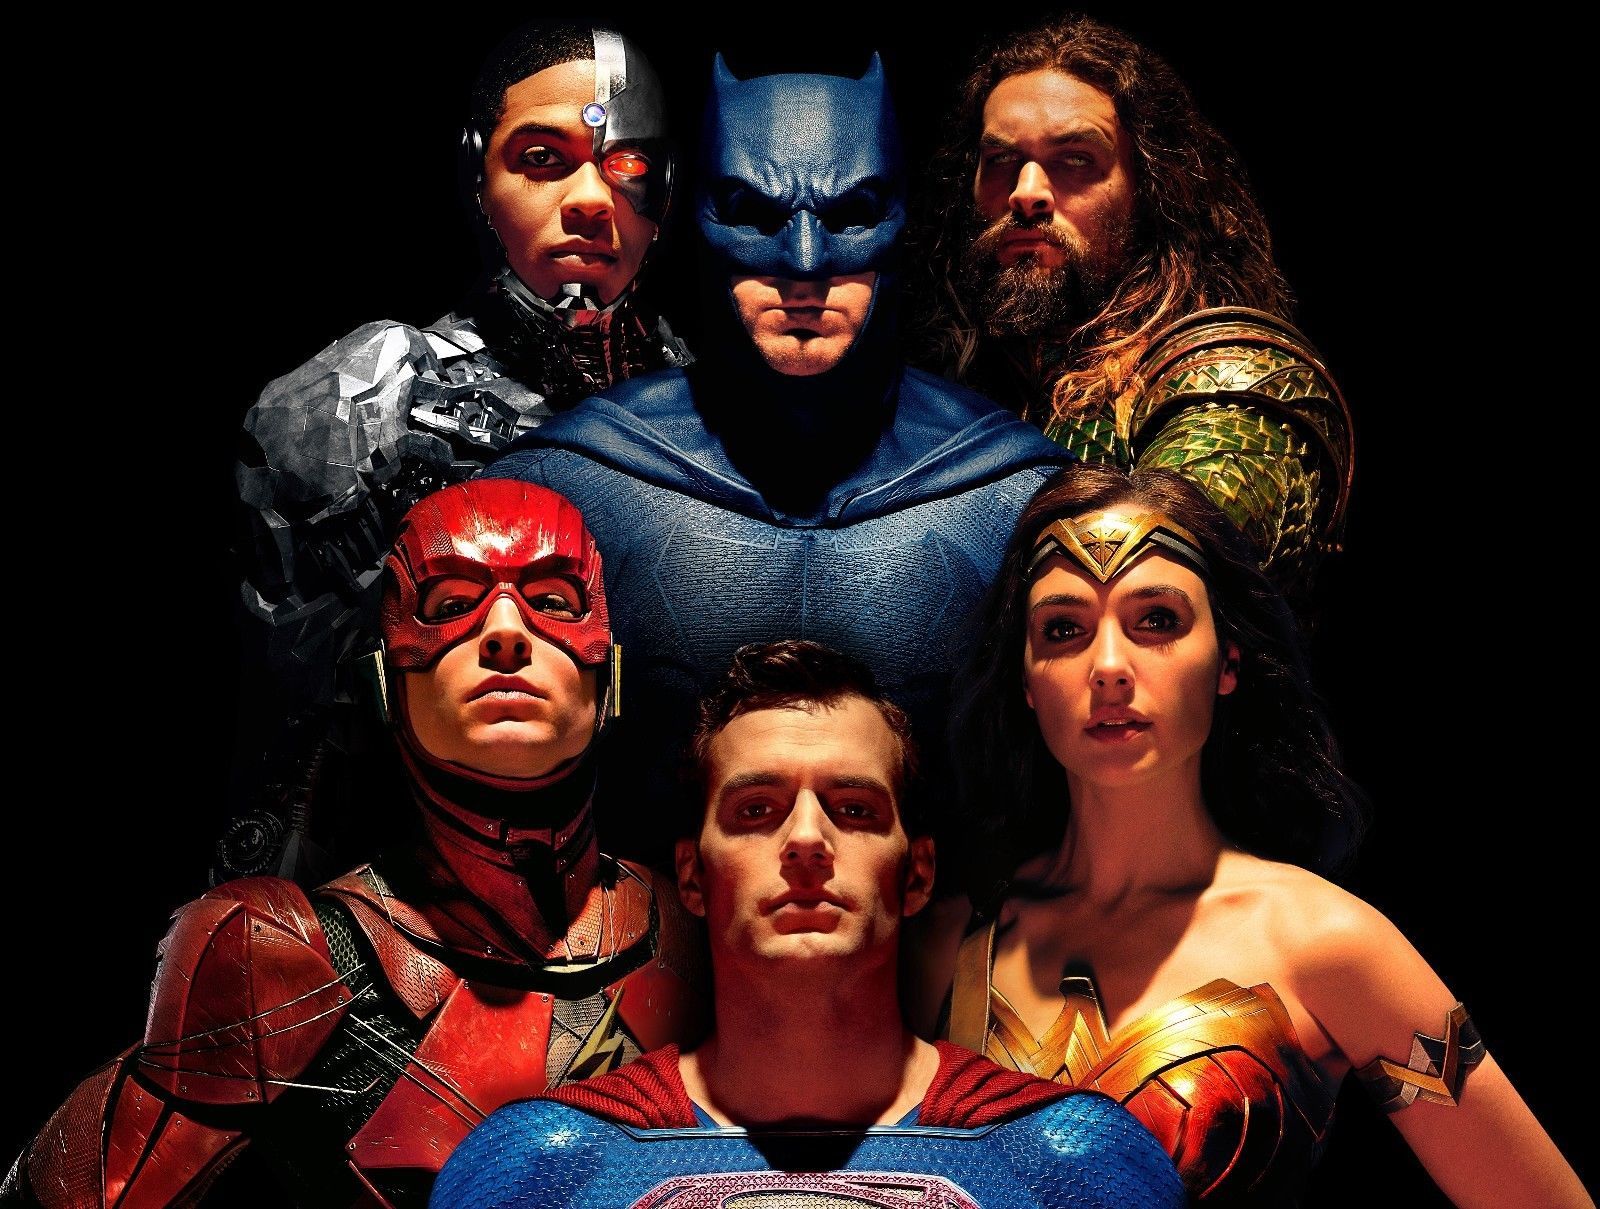 The Suicide Squad - Movie Poster (Masks - Suicide Squad 2) (Size: 24 x 36)